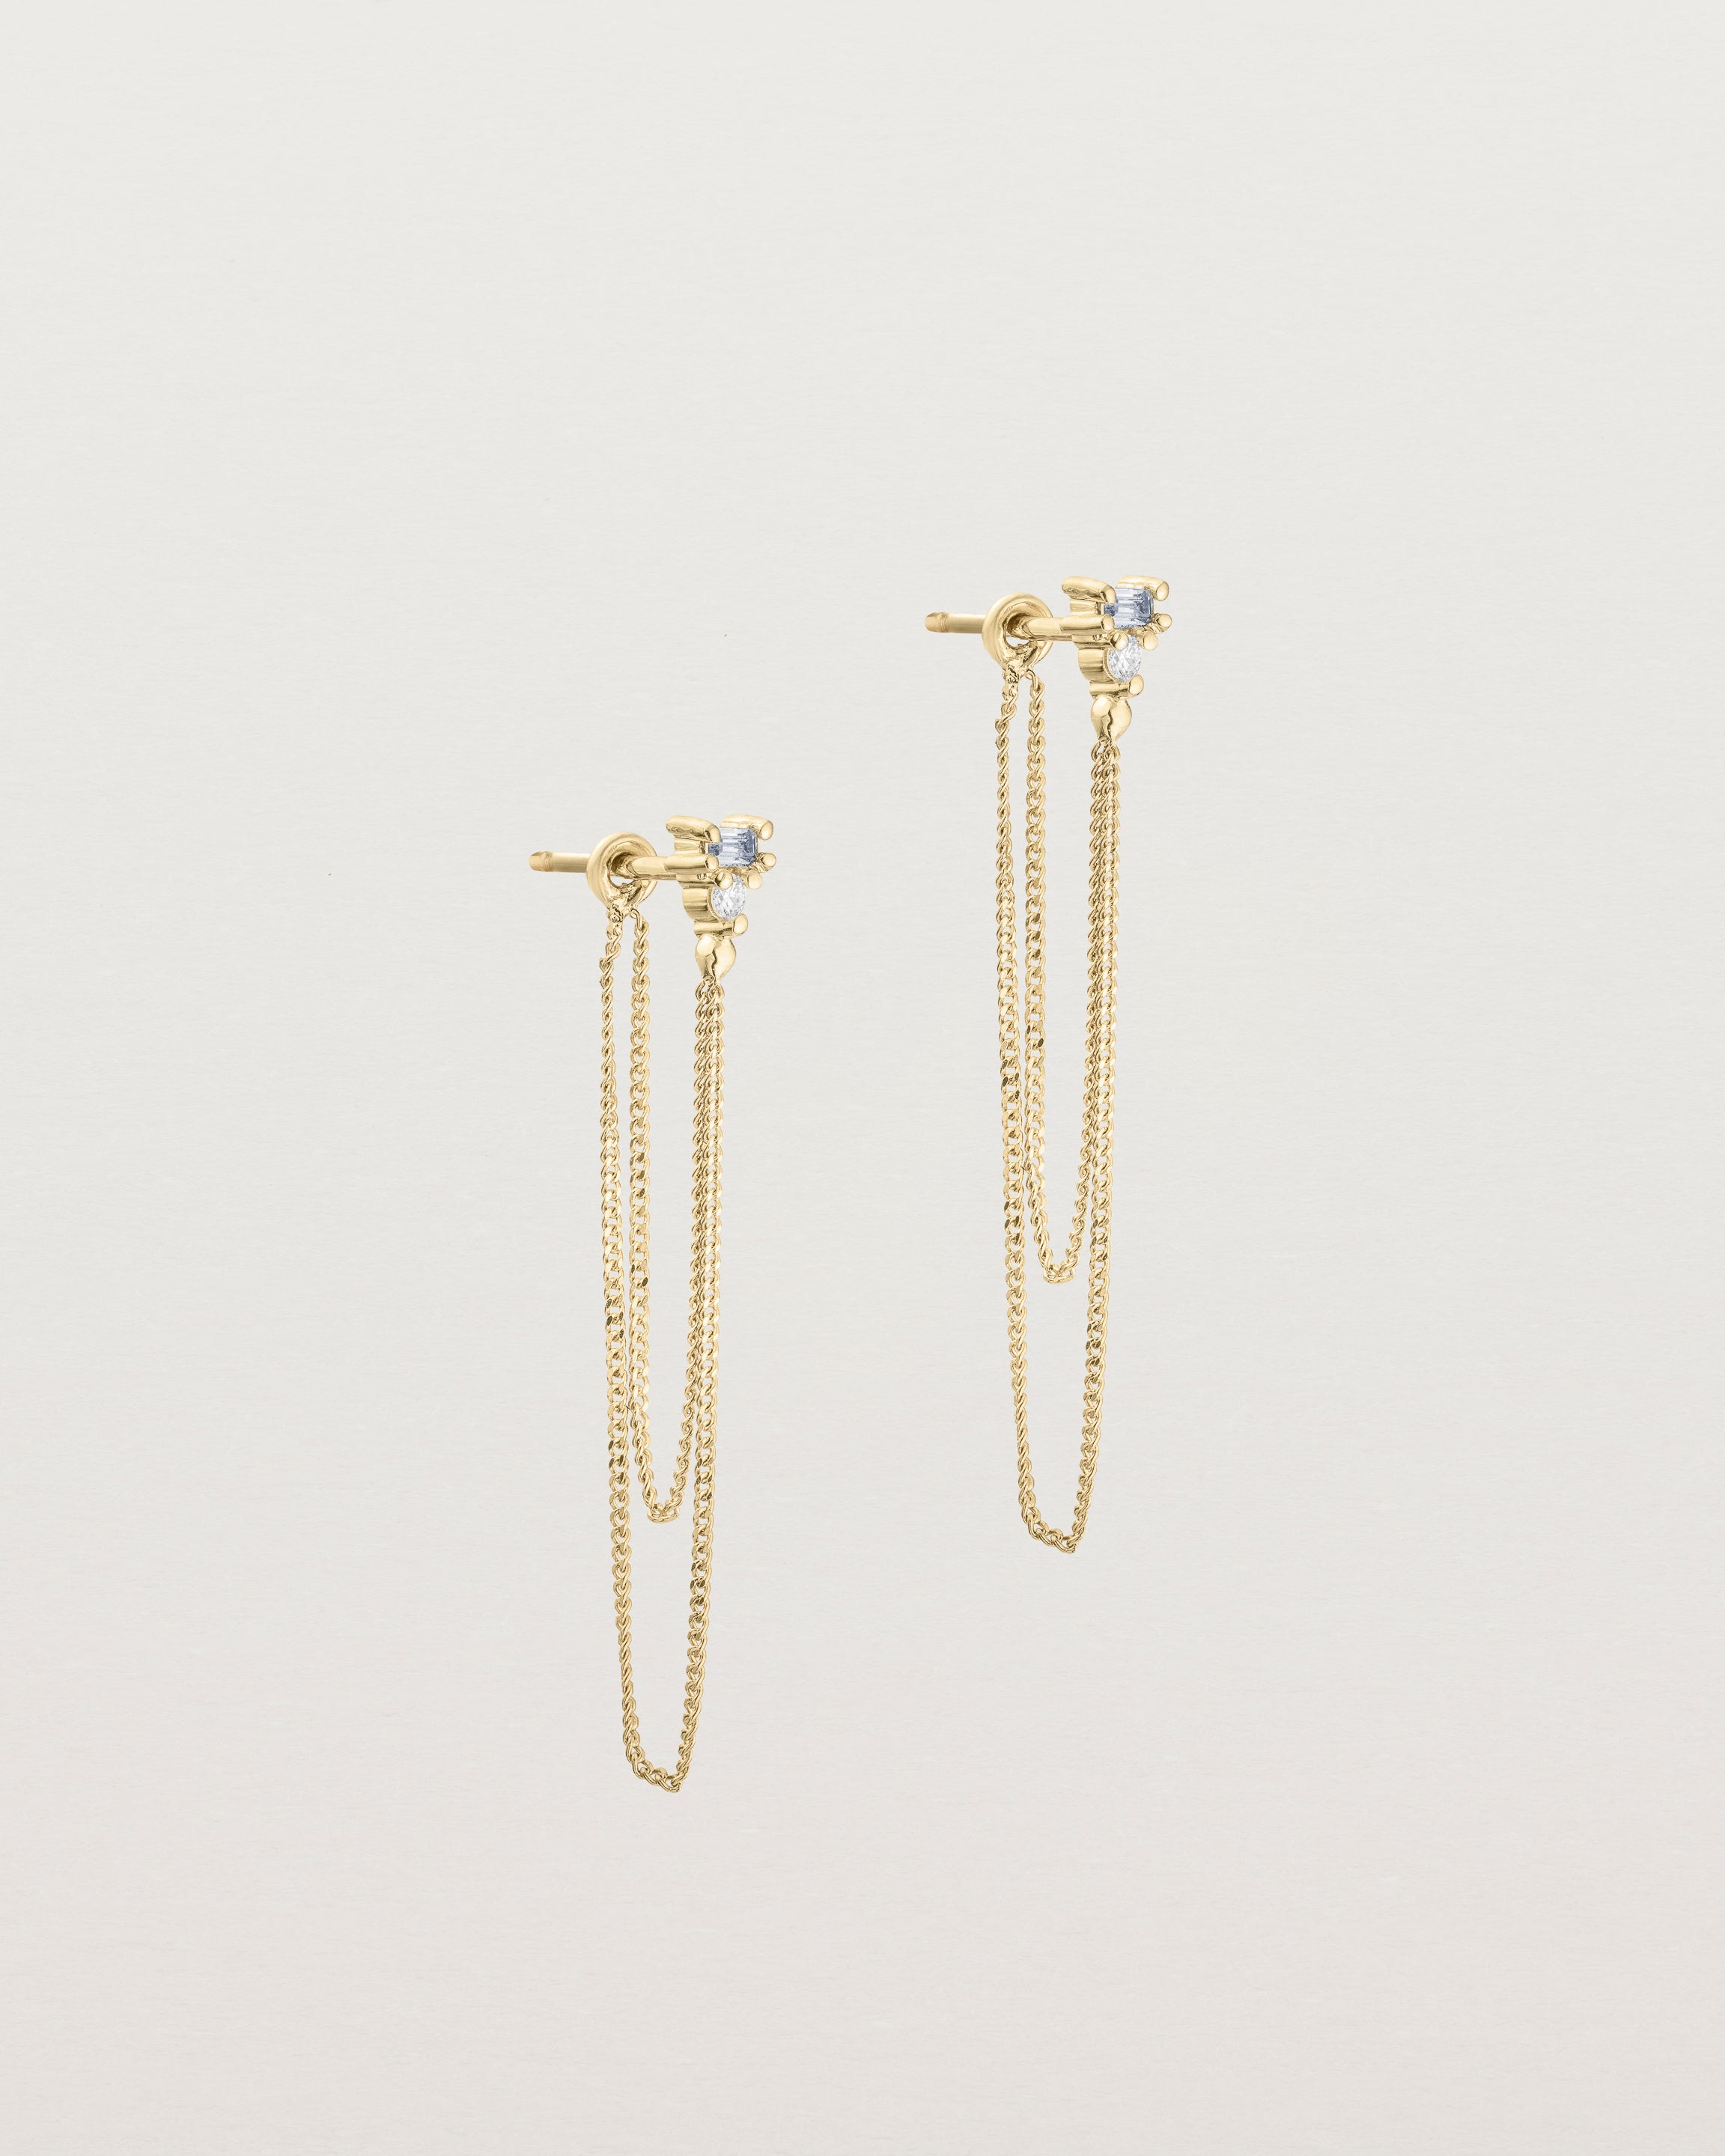 A pair of Sena Loop Studs | Sapphire & Diamond | Yellow Gold.